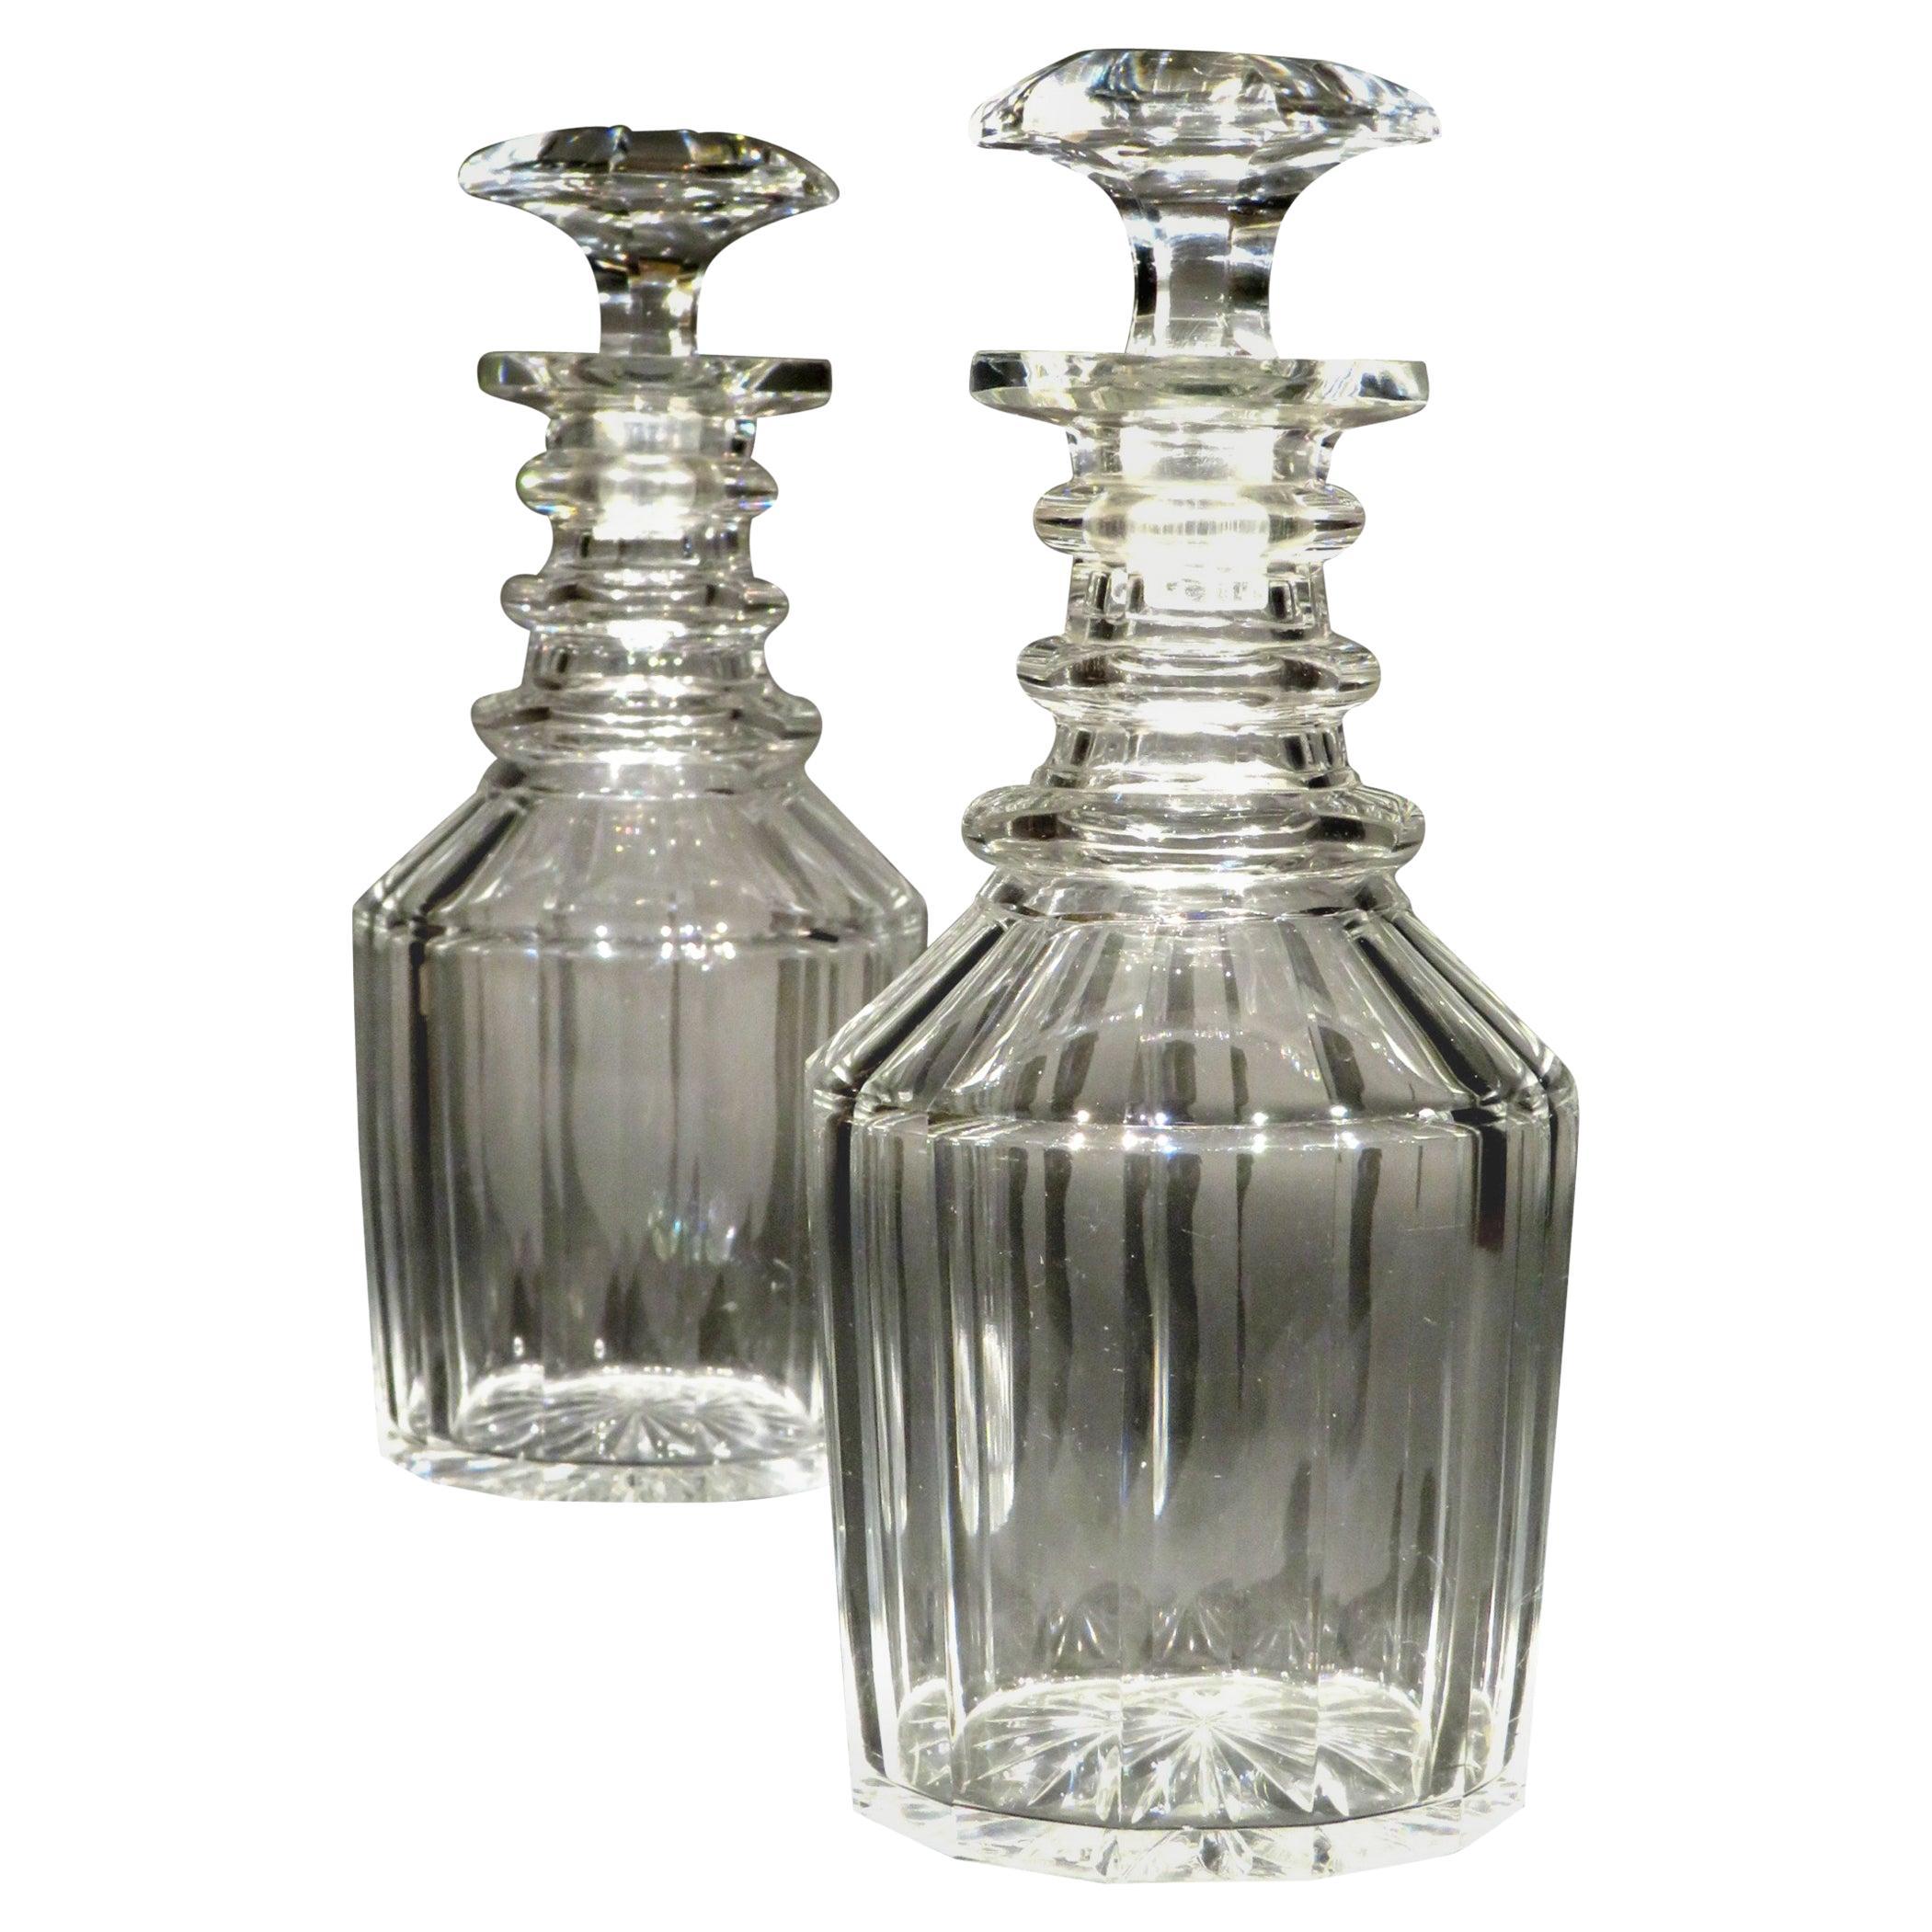 A Very Fine Pair of Georgian Anglo-Irish Glass Spirit Decanters, UK Circa 1820